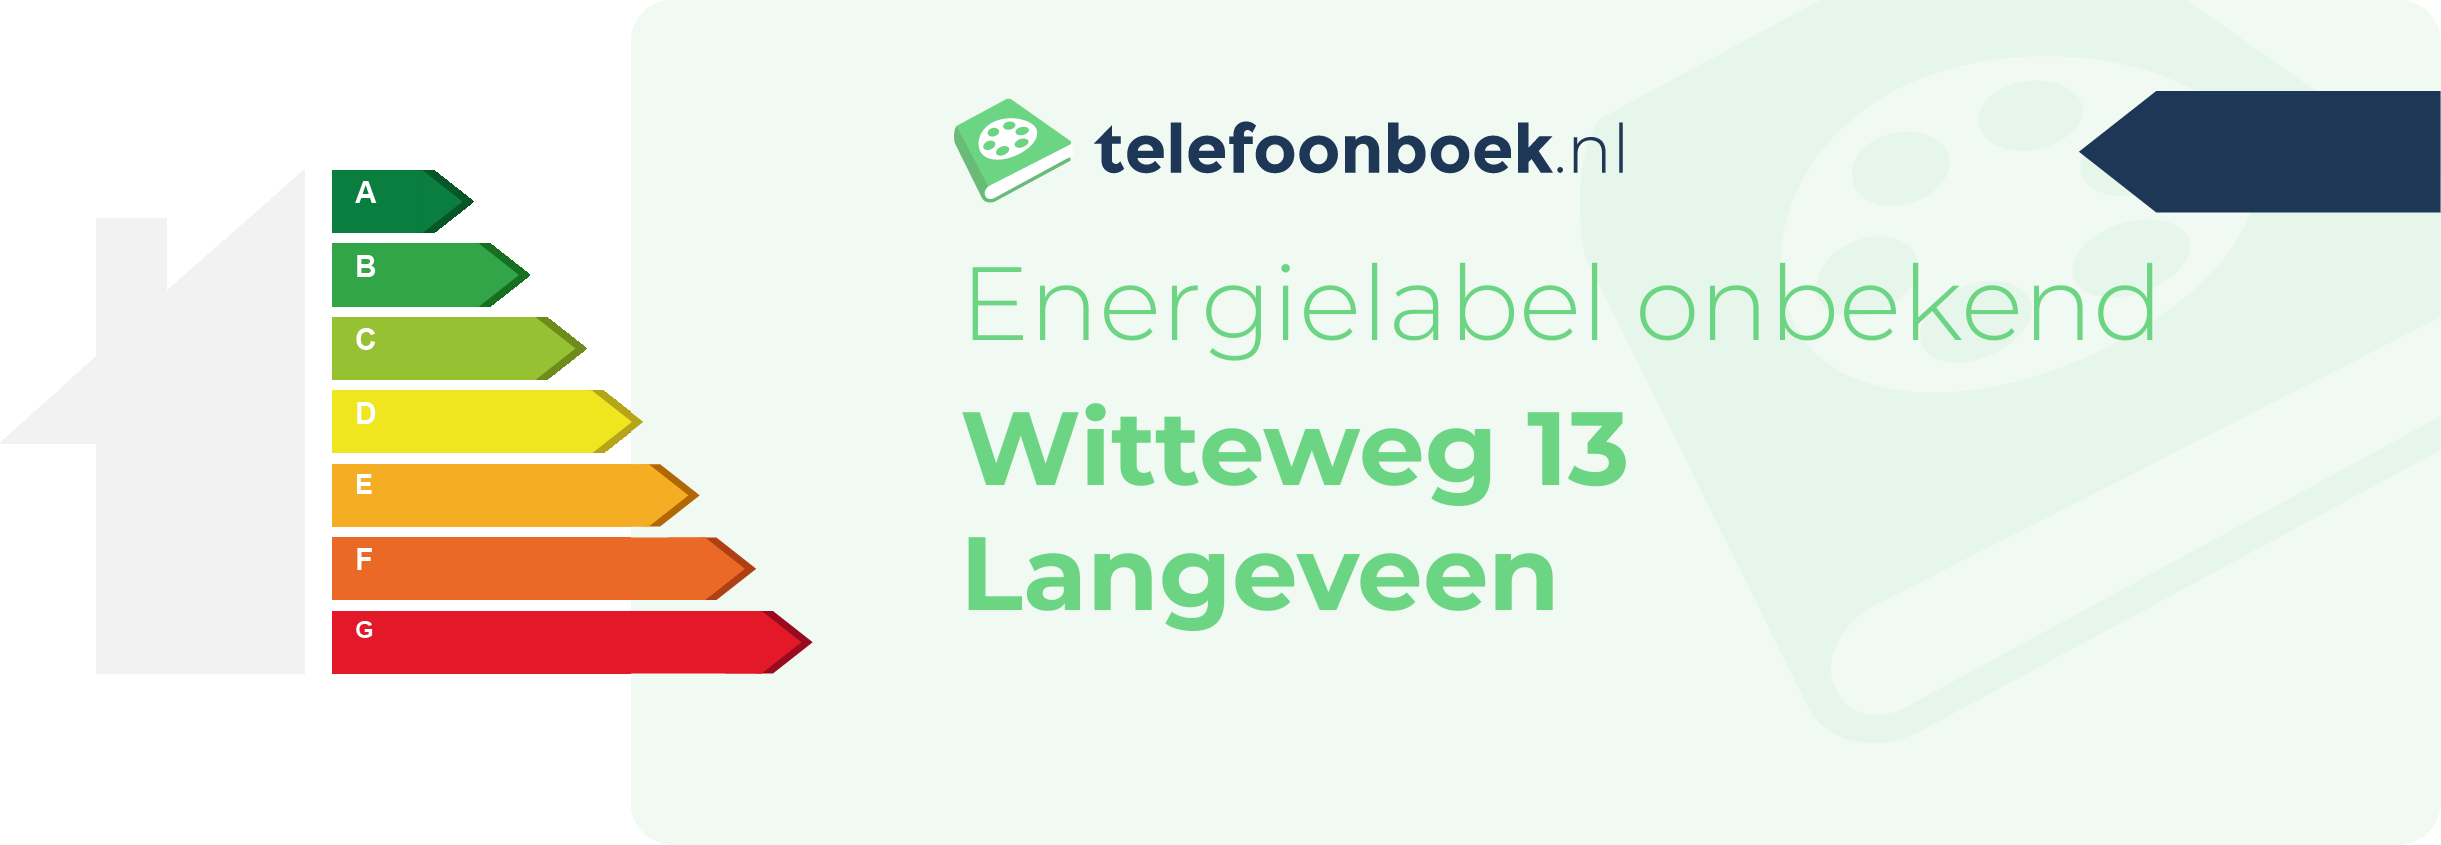 Energielabel Witteweg 13 Langeveen